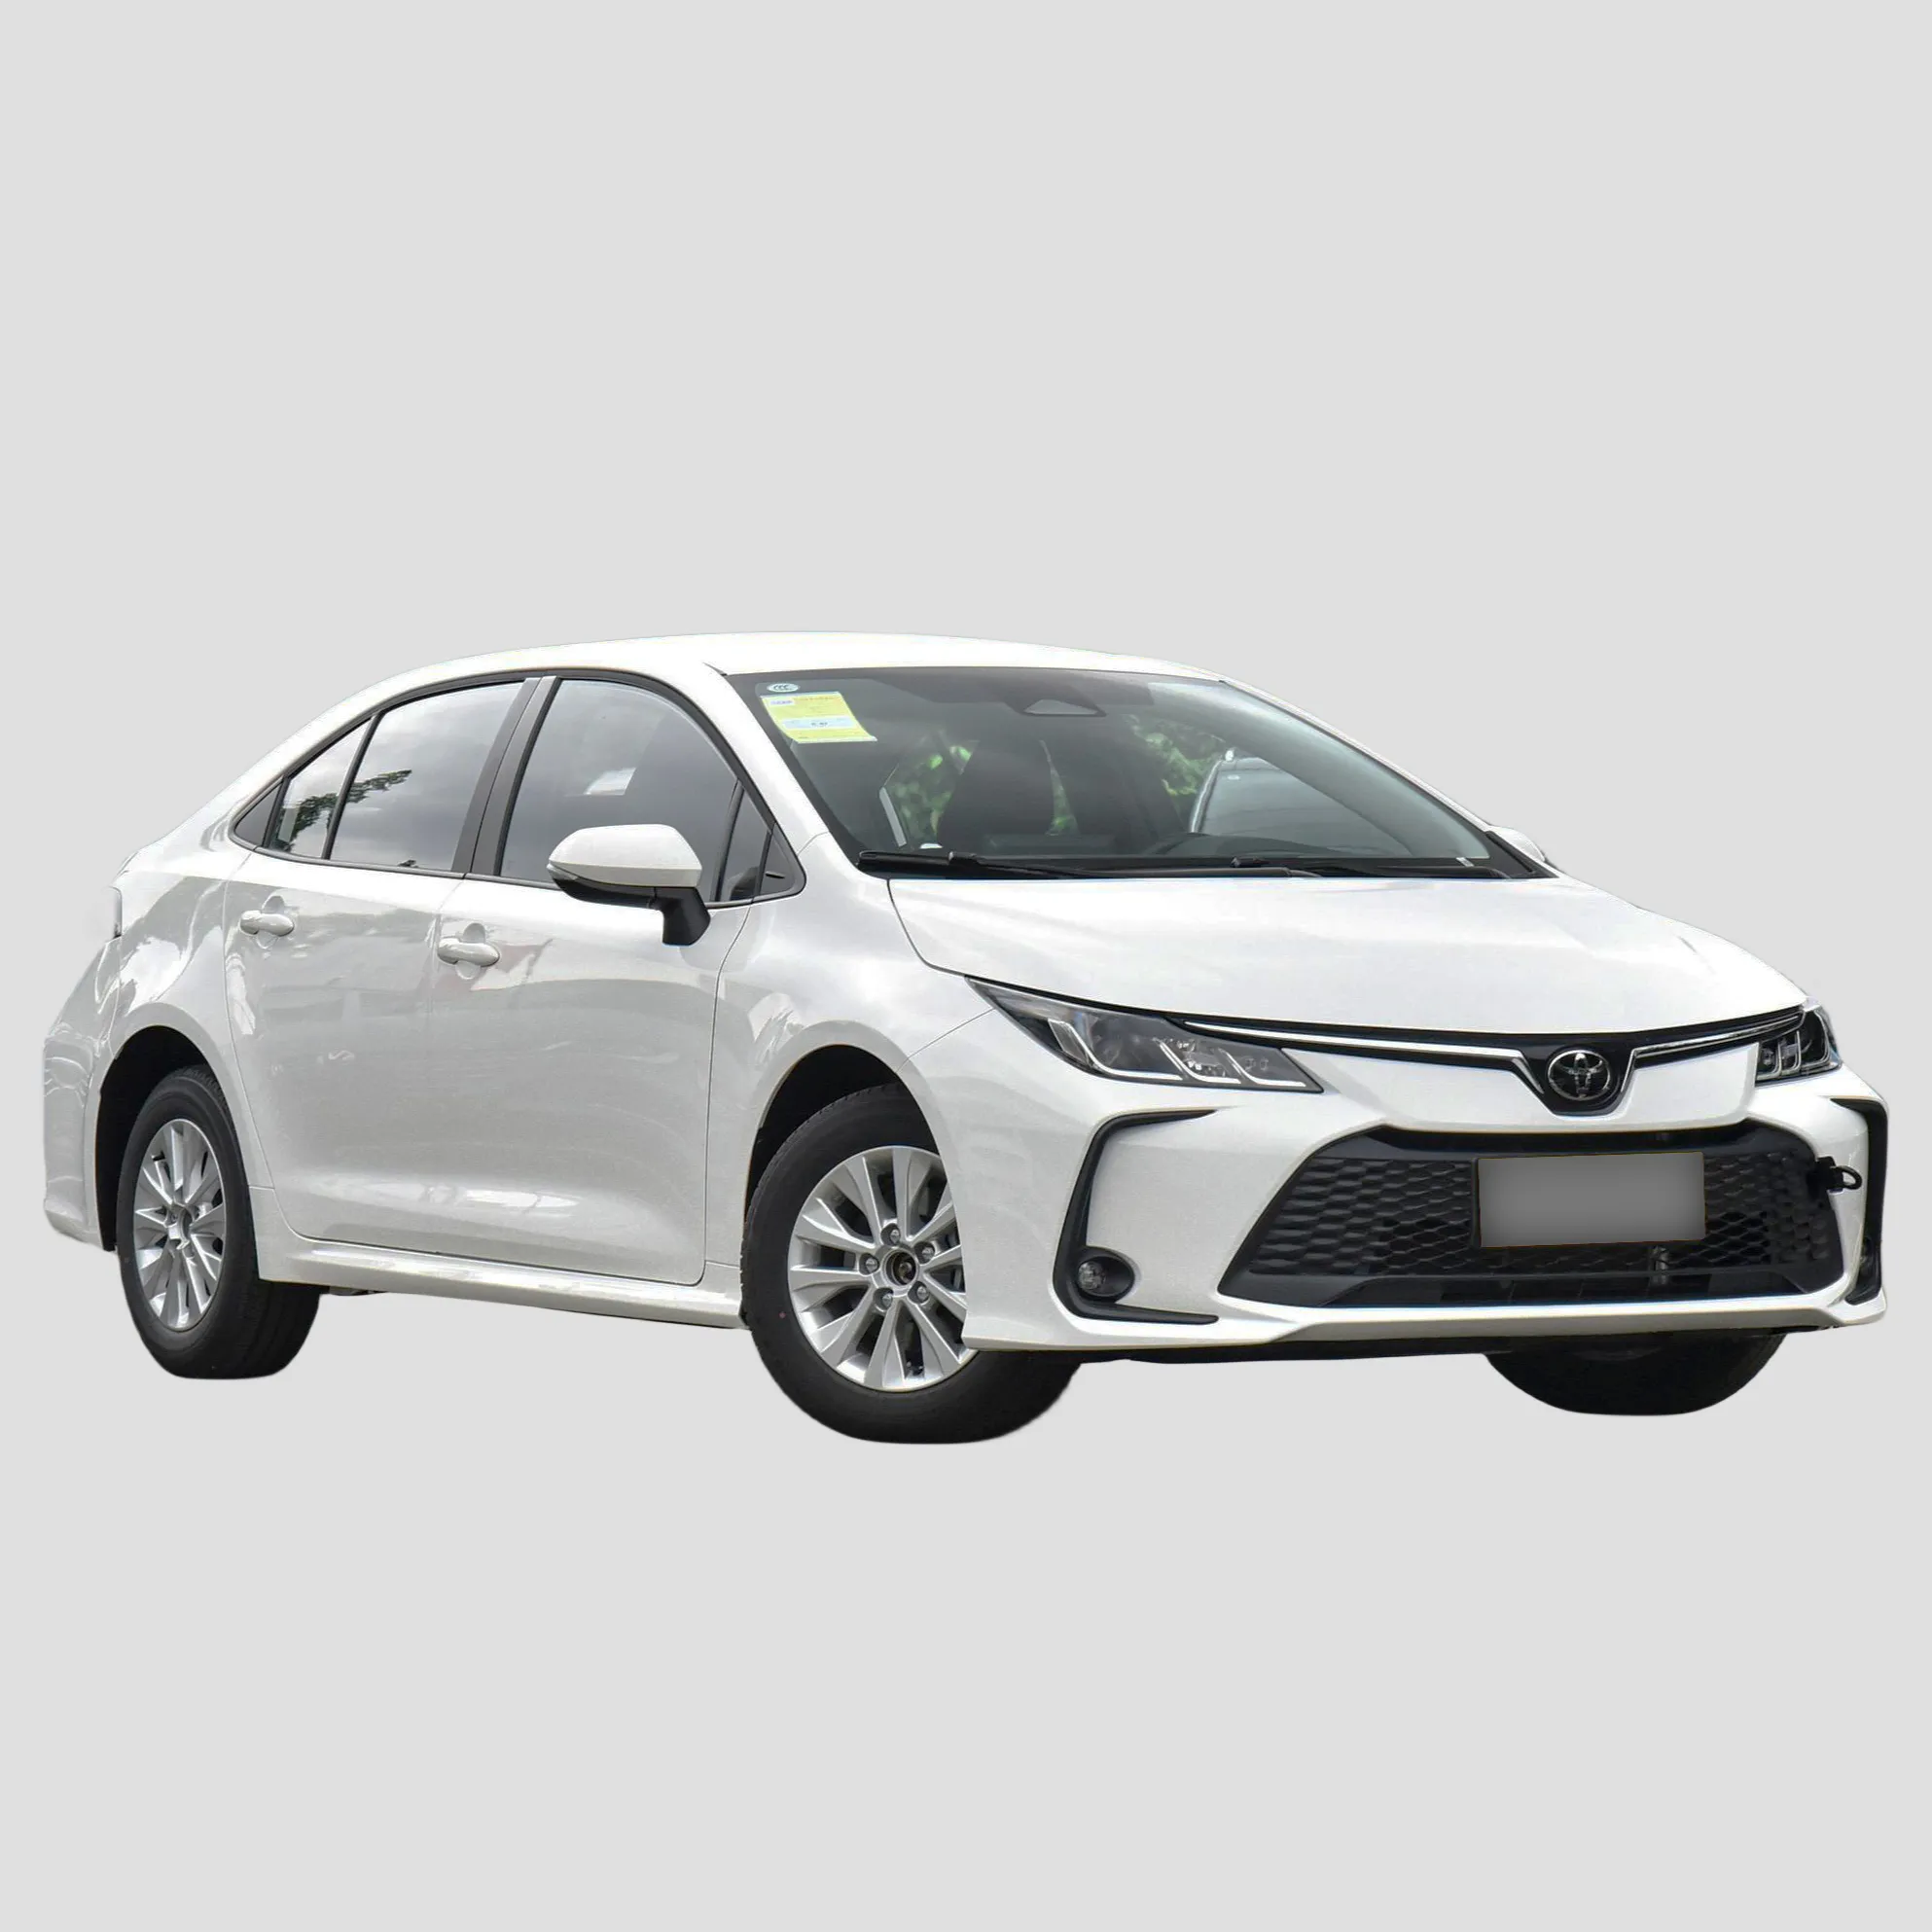 Toyota Corolla 1.5L Naturalmente Aspirado Sedan Novo E Usado 2022 2023 China Preço Barato Toyota Corolla Veículos Para Venda